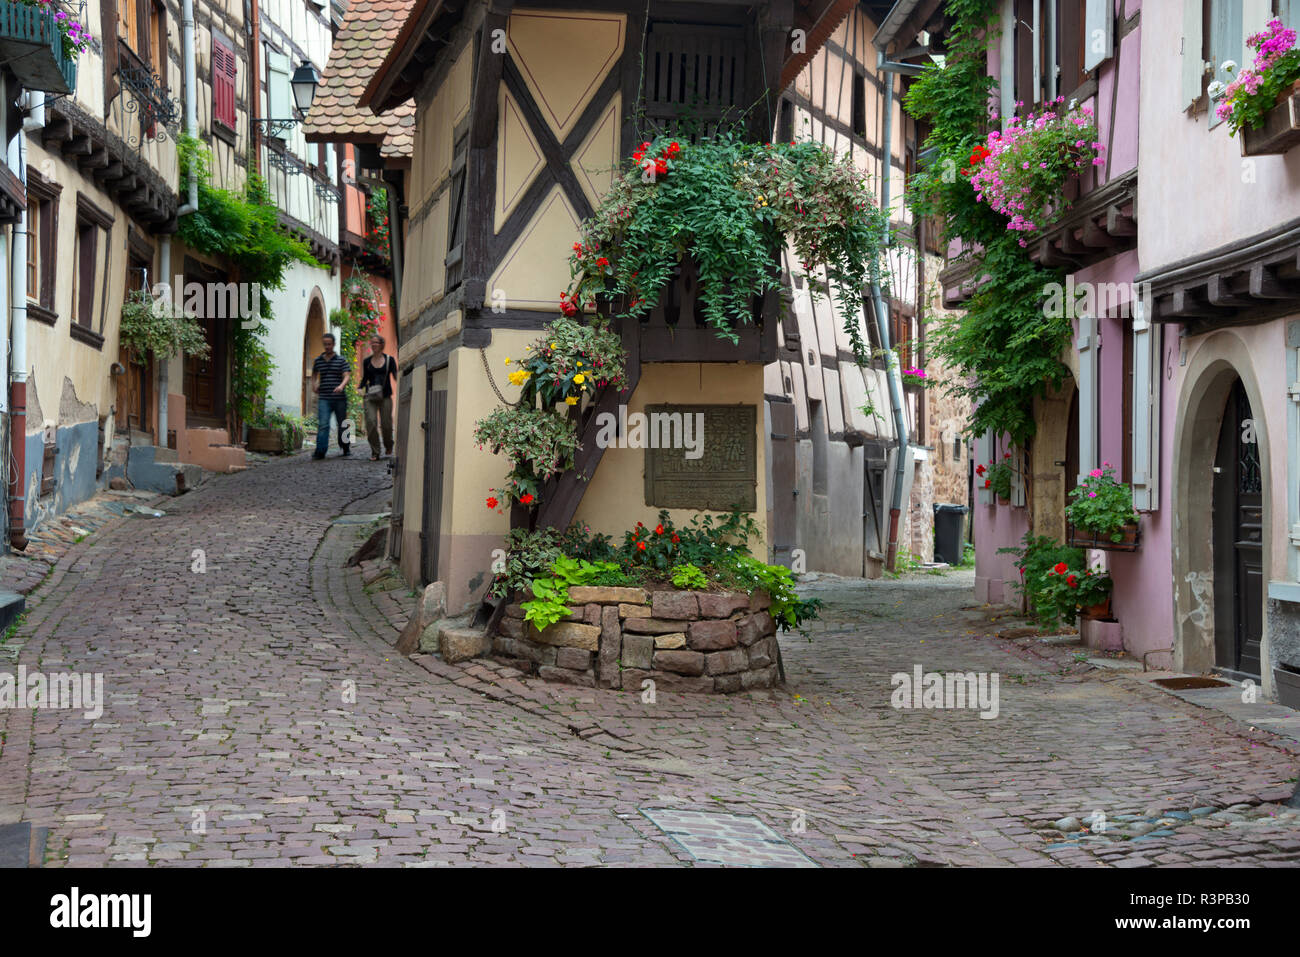 European Union, France, Alsace, Eguisheim village. Tourists walk on cobblestone street winding between traditional architecture of Equisheim village. Stock Photo